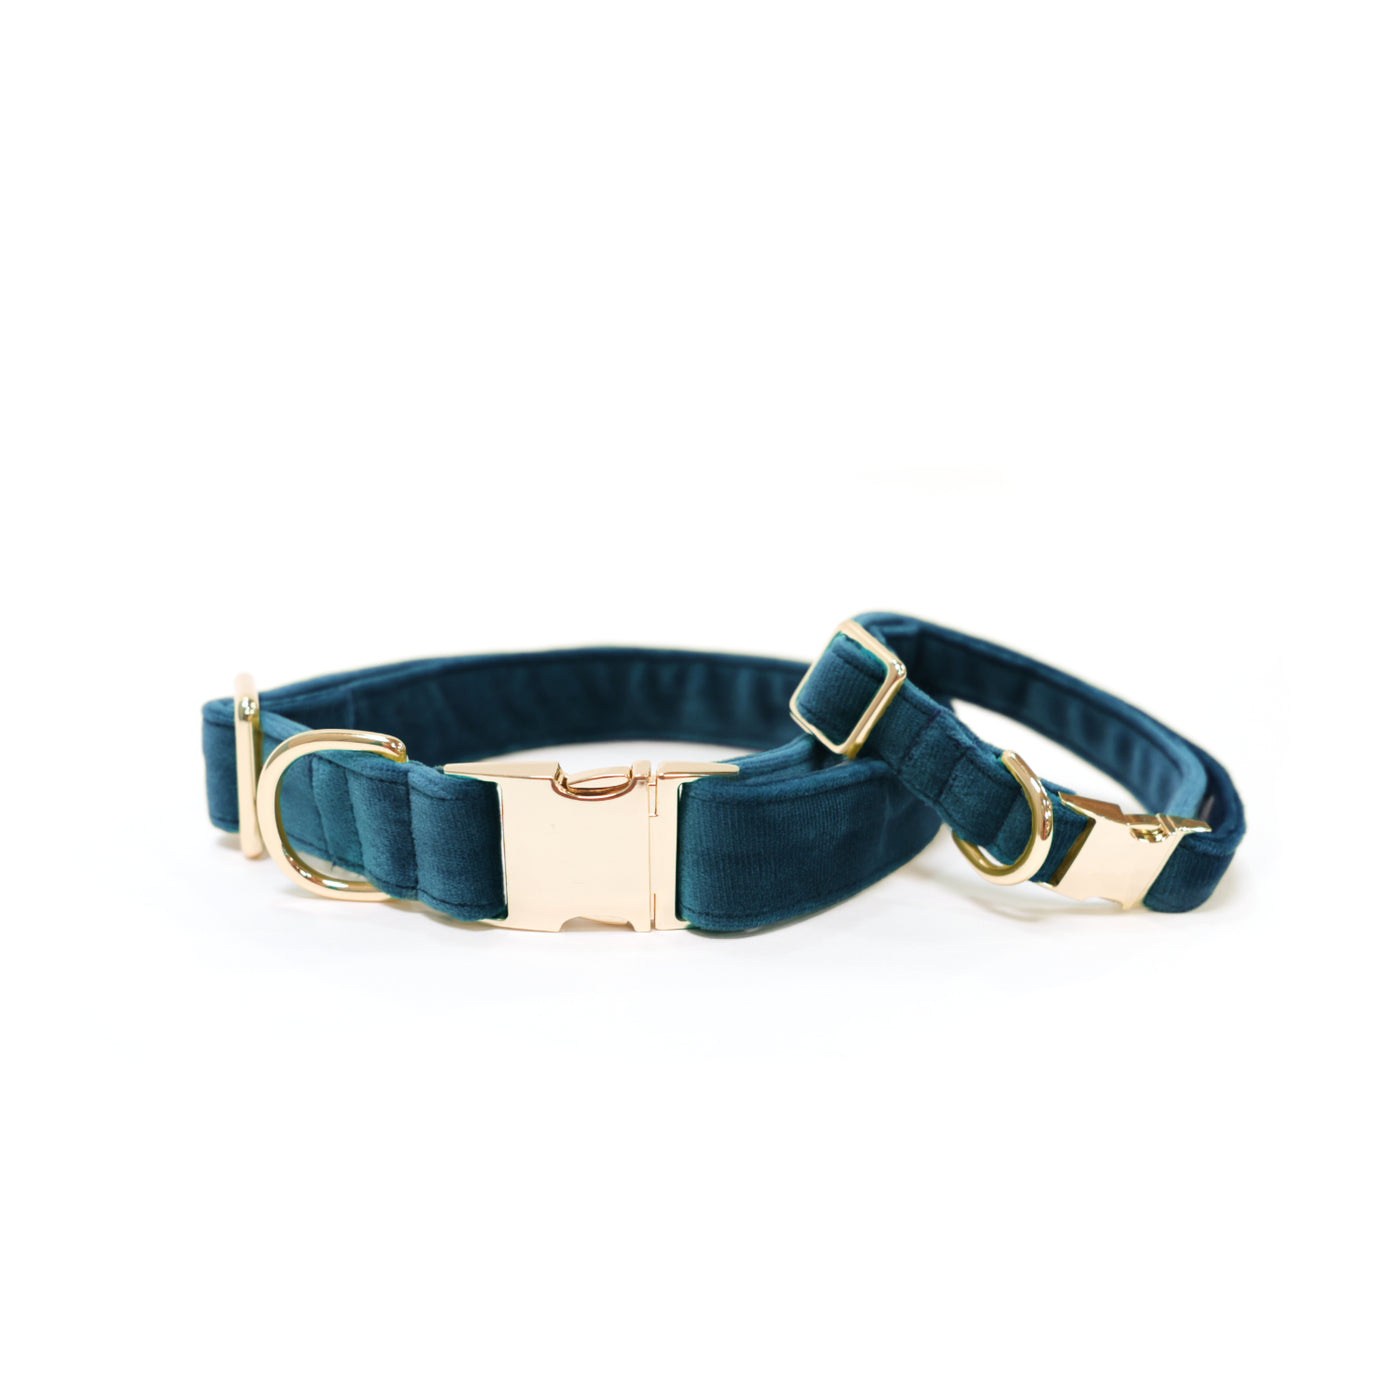 Dark teal velvet dog collars with gold hardware in Size M & S